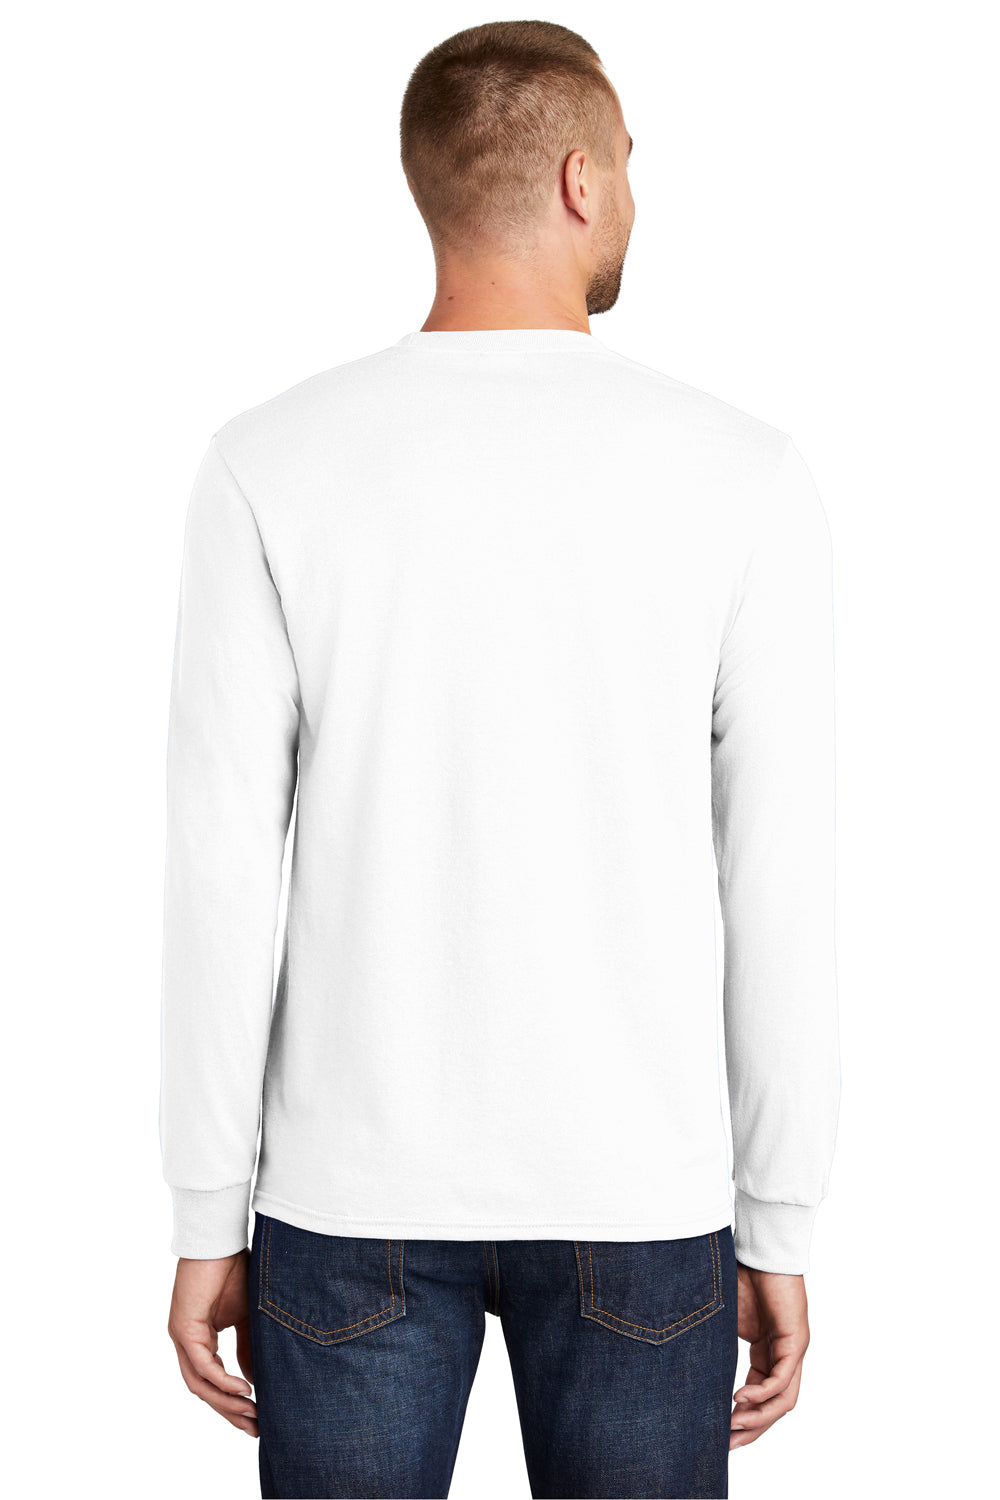 Port & Company PC55LS Mens Core Long Sleeve Crewneck T-Shirt White Back